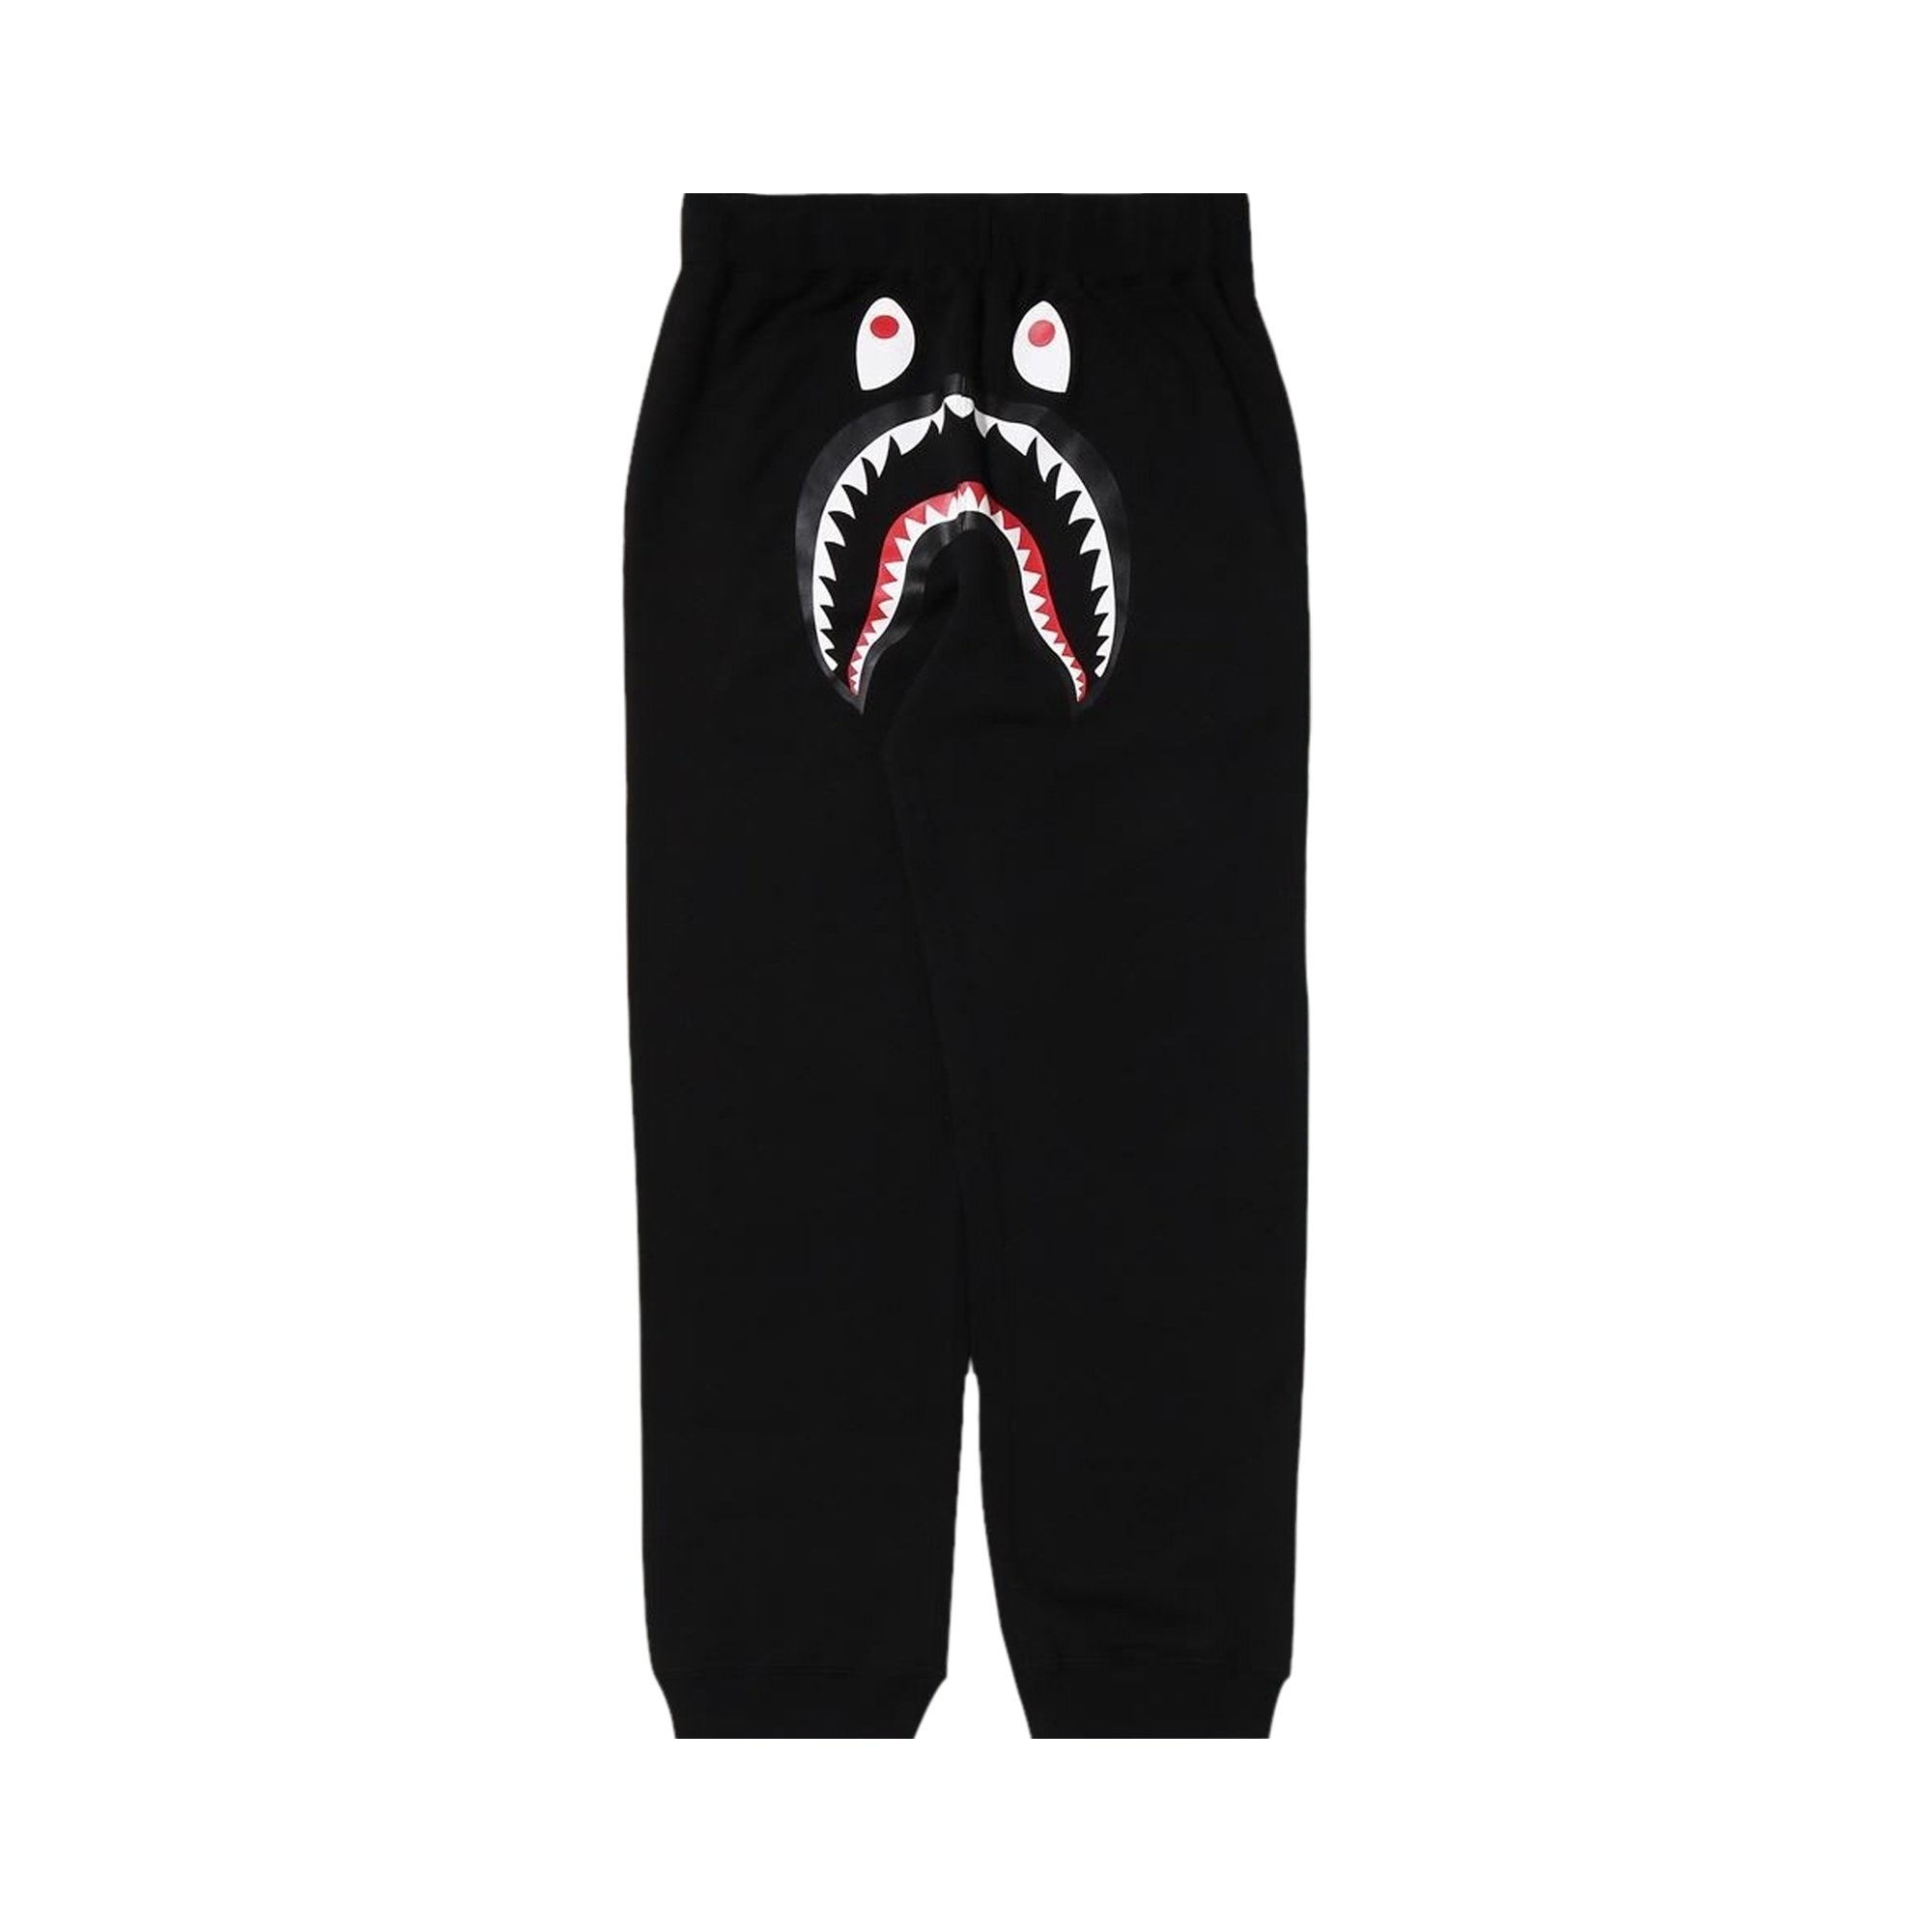 Buy BAPE Shark Sweat Pants 'Black' - 1I70 152 001 BLACK | GOAT CA